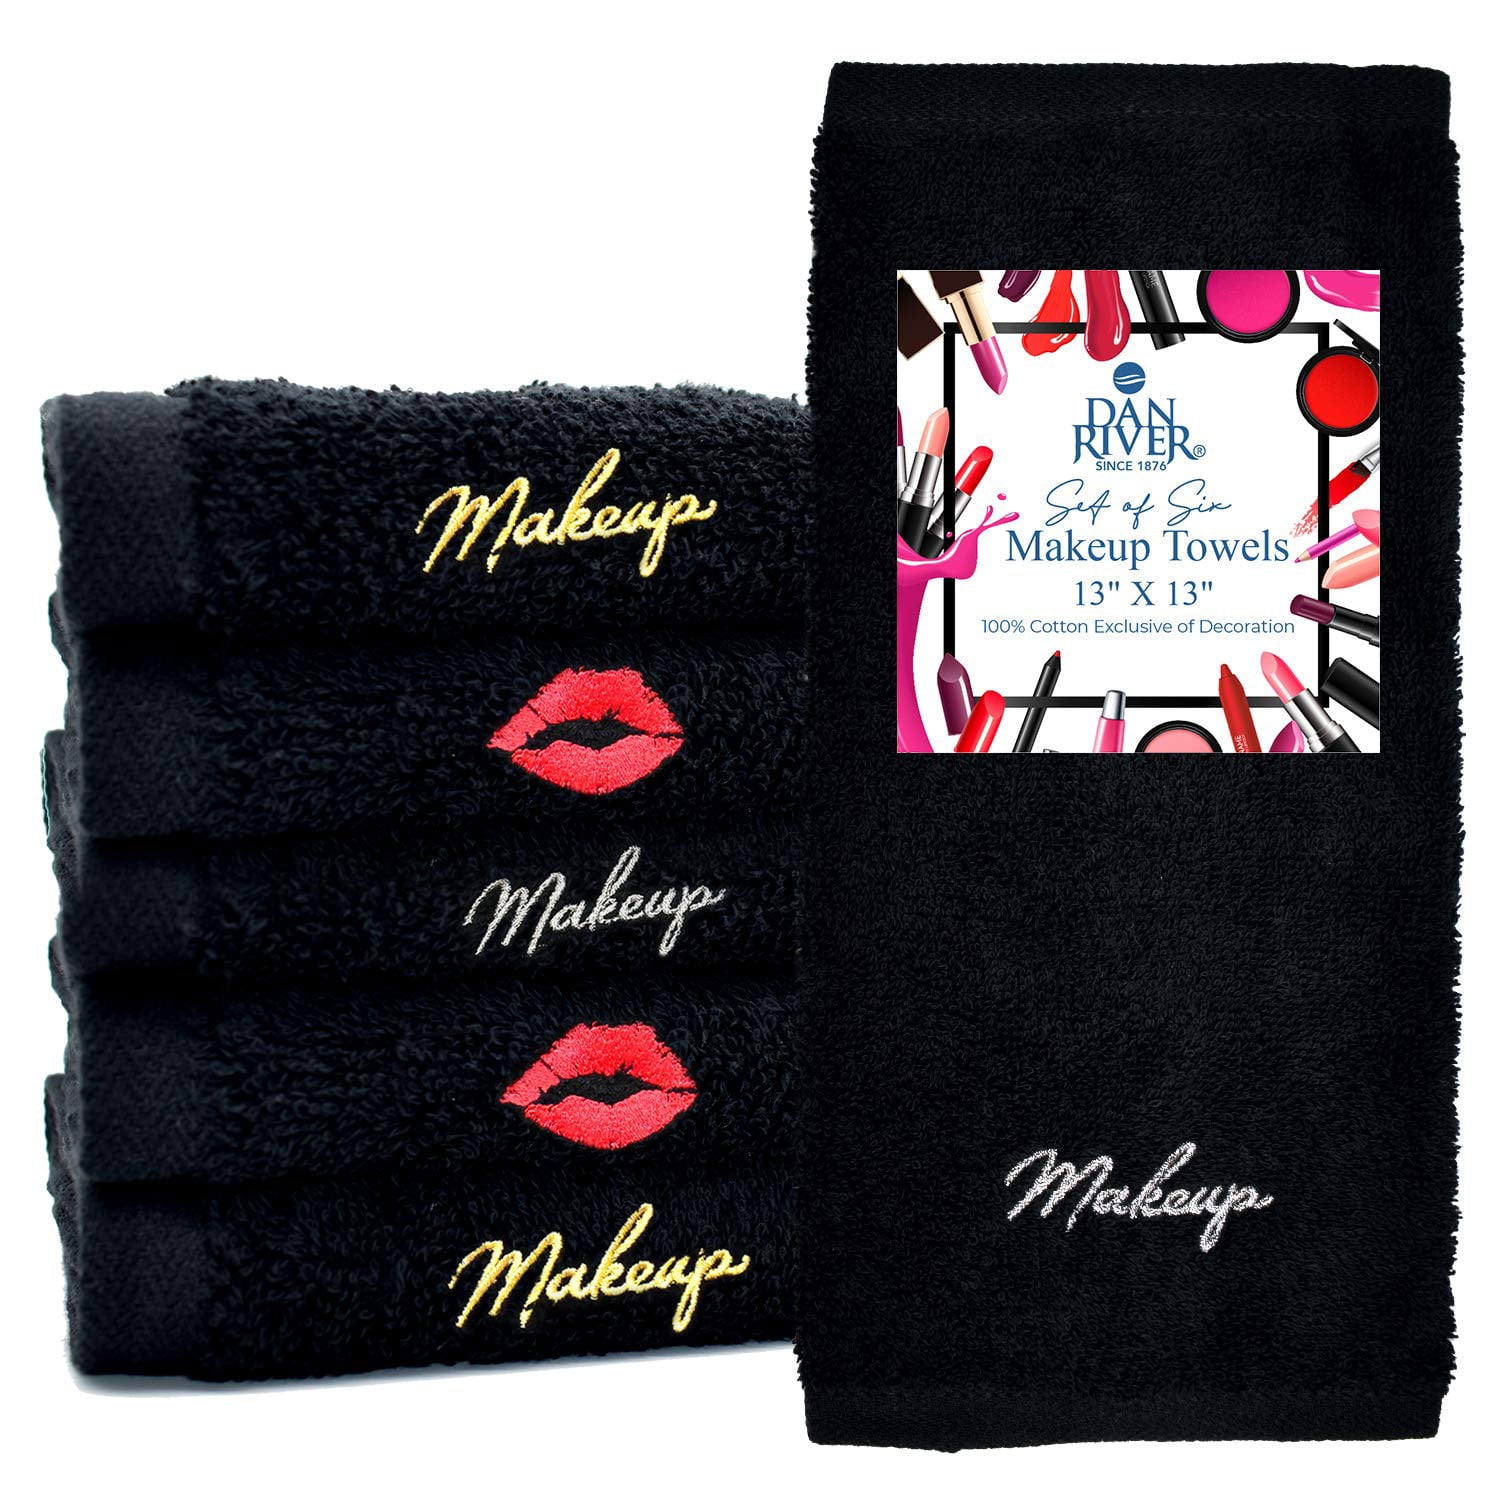 DAN RIVER 100% Cotton Makeup Towel- 13x13 Black Towels-Makeup Remover Cloth-Luxury Washcloths for Gentle Face Wash, Removing Eye Liner, Mascara, Foundation Eraser-Soft and Lightweight, Pack of 6